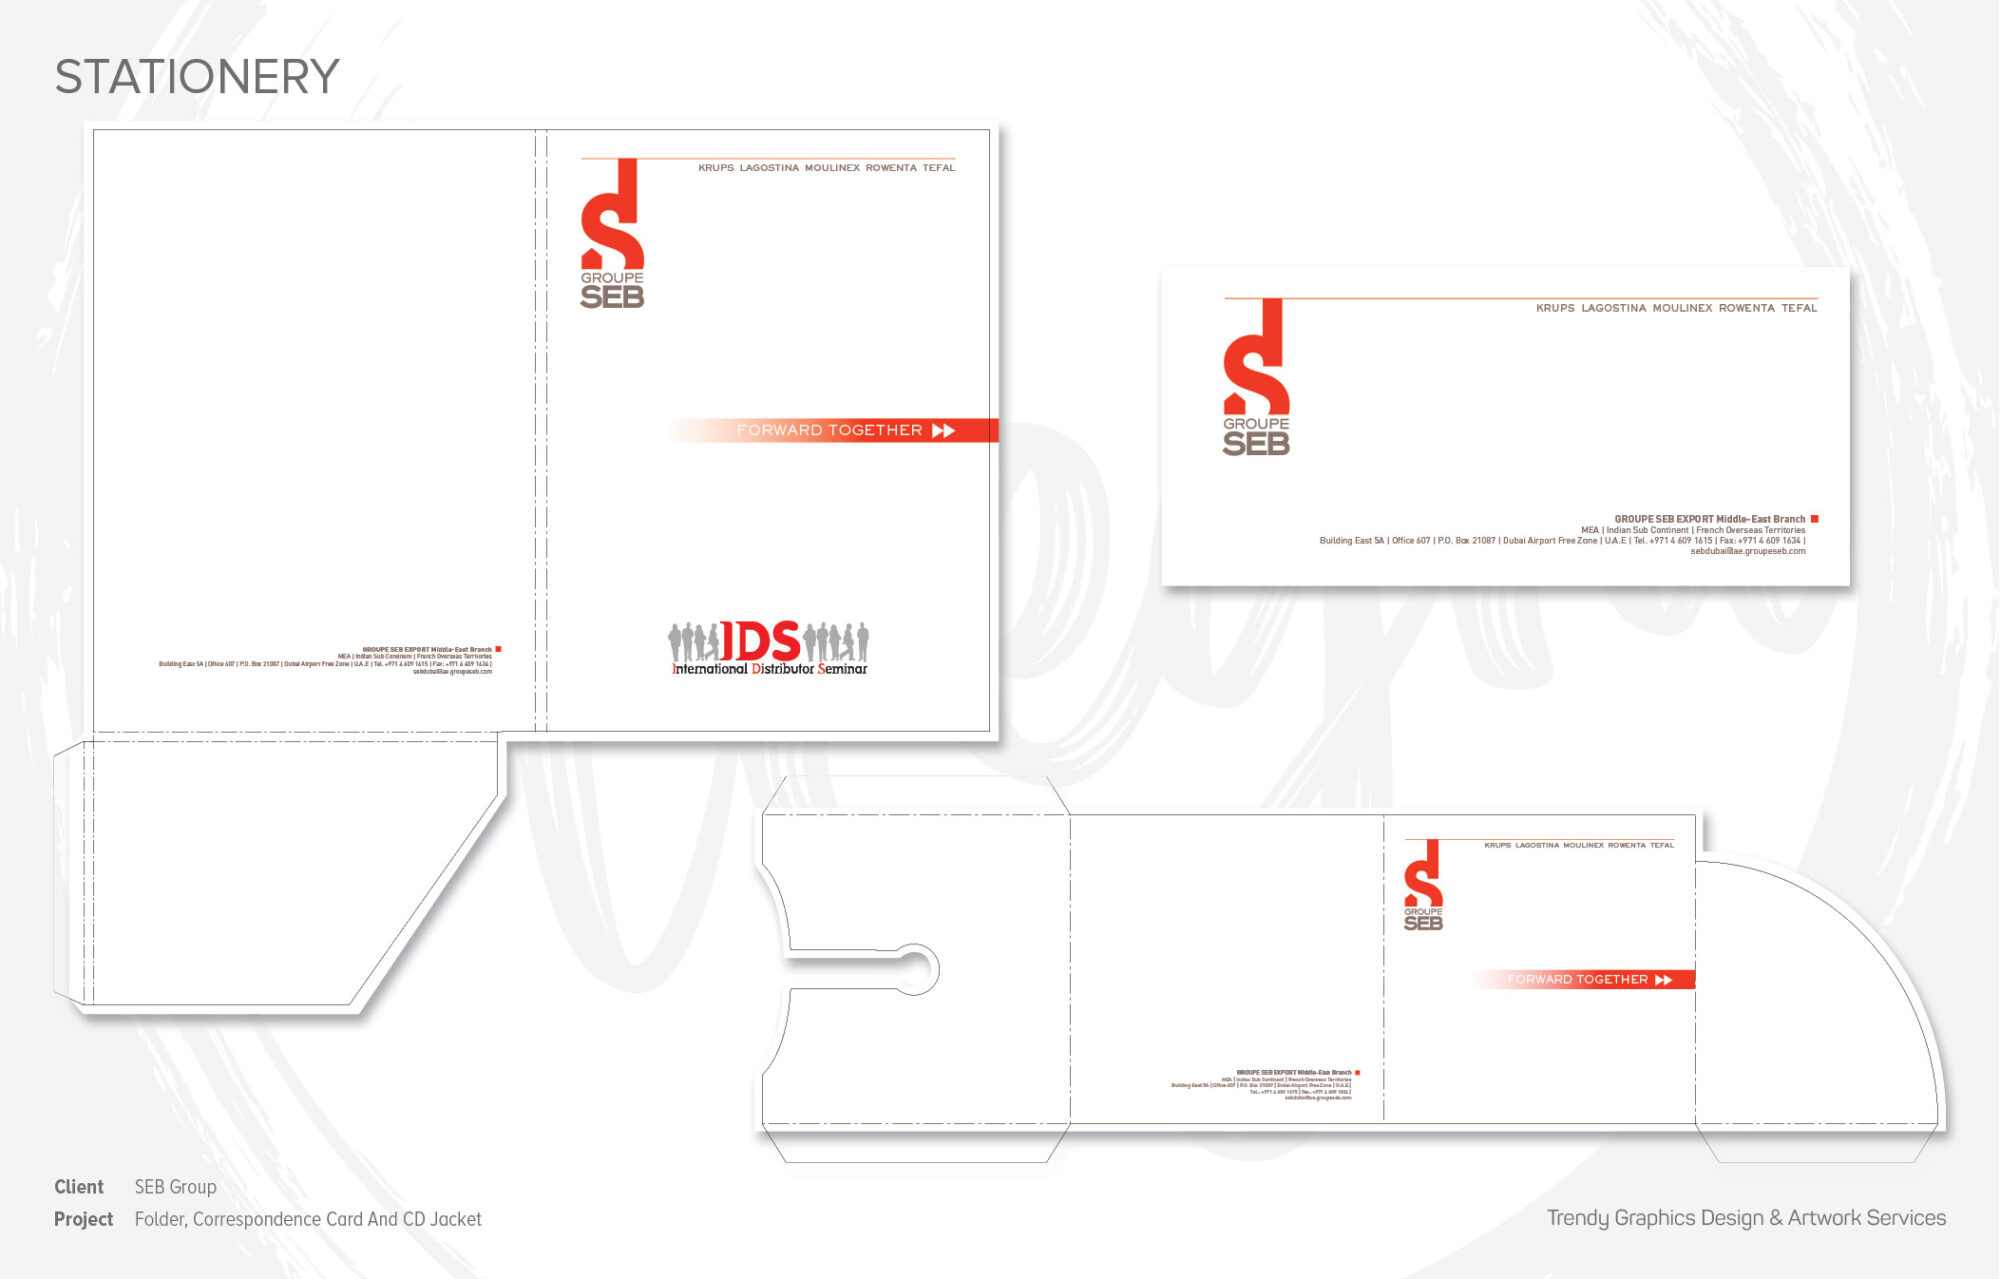 SEB Group – Folder, Correspondence Card And CD Jacket